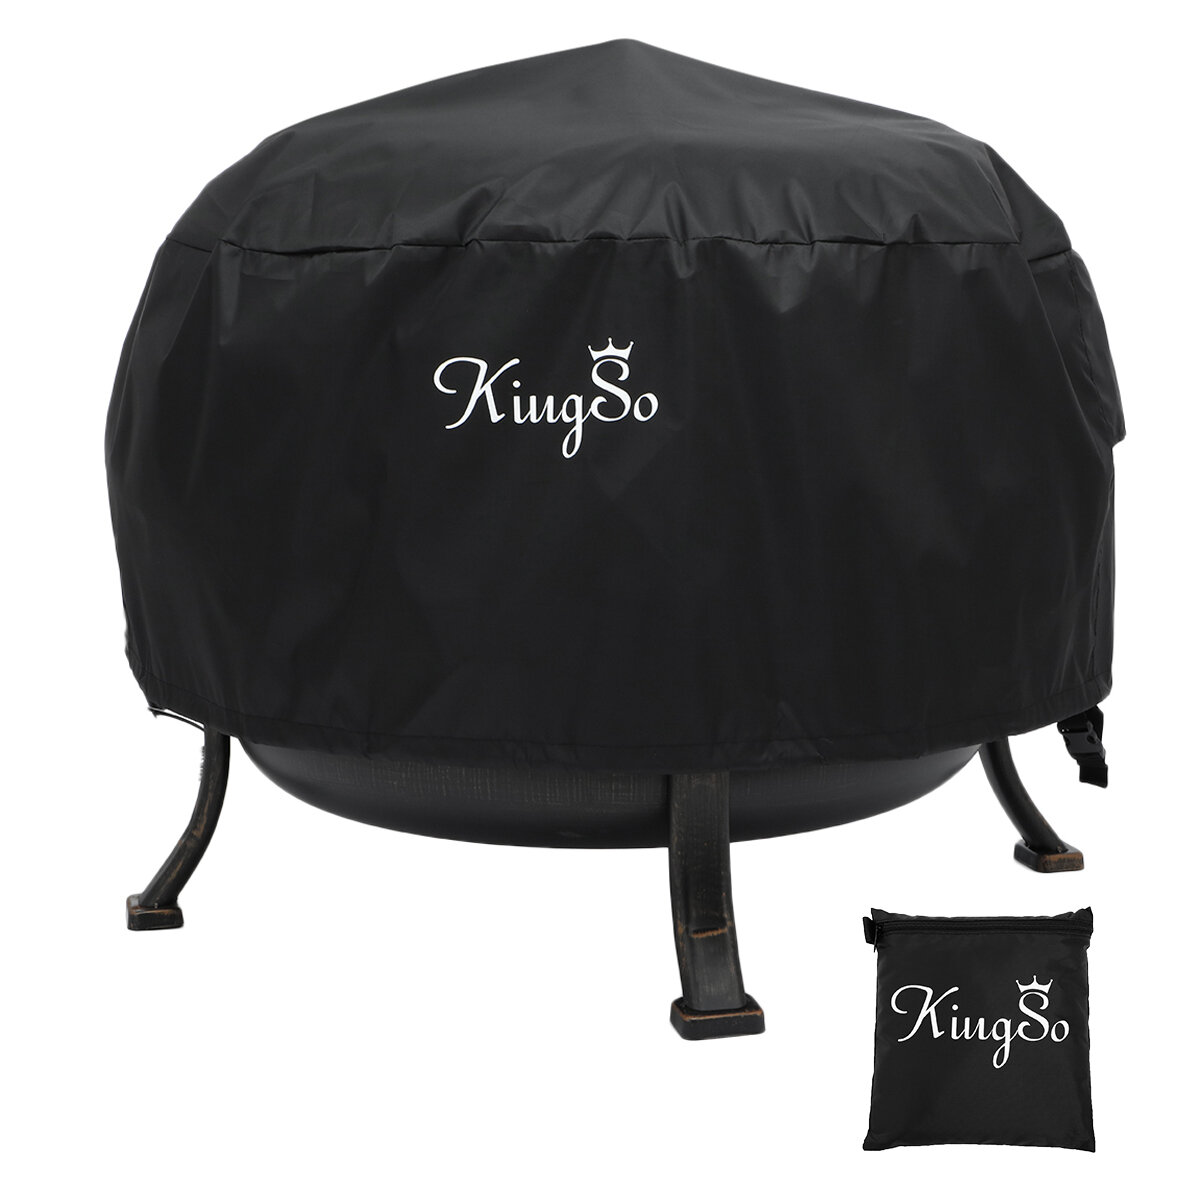 KingSo - Cubierta redonda para hoguera de 36 pulgadas Impermeable Cubierta de hoguera para hoguera ardiente para al aire libre Patio de jardín cámping